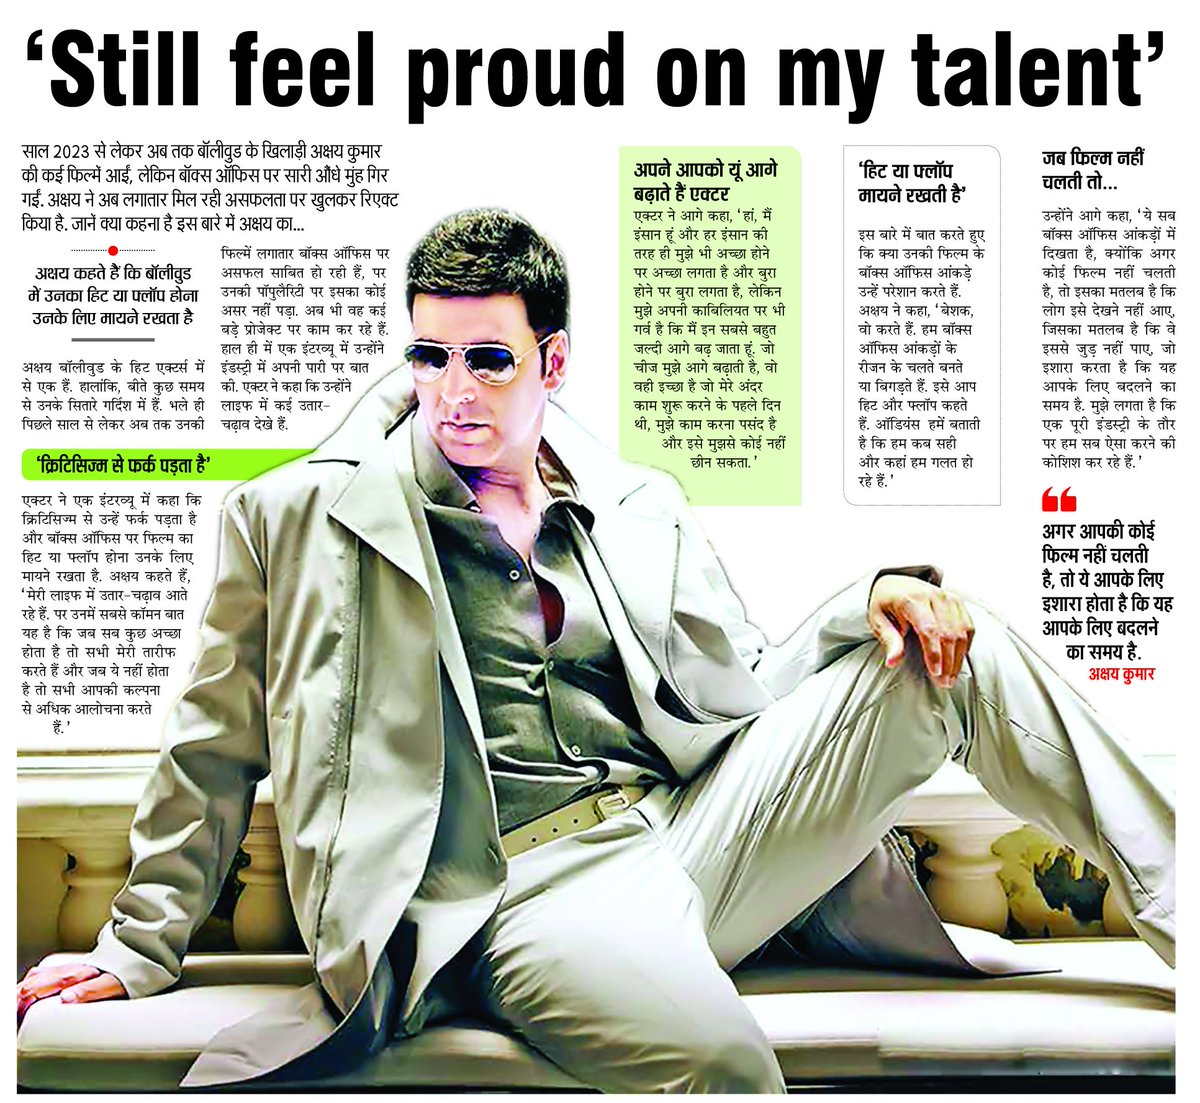 Still feel proud on my talent: #AkshayKumar 
#Bollywoodactor #Bollywoodnews #bollywood #AkshayKumar𓃵